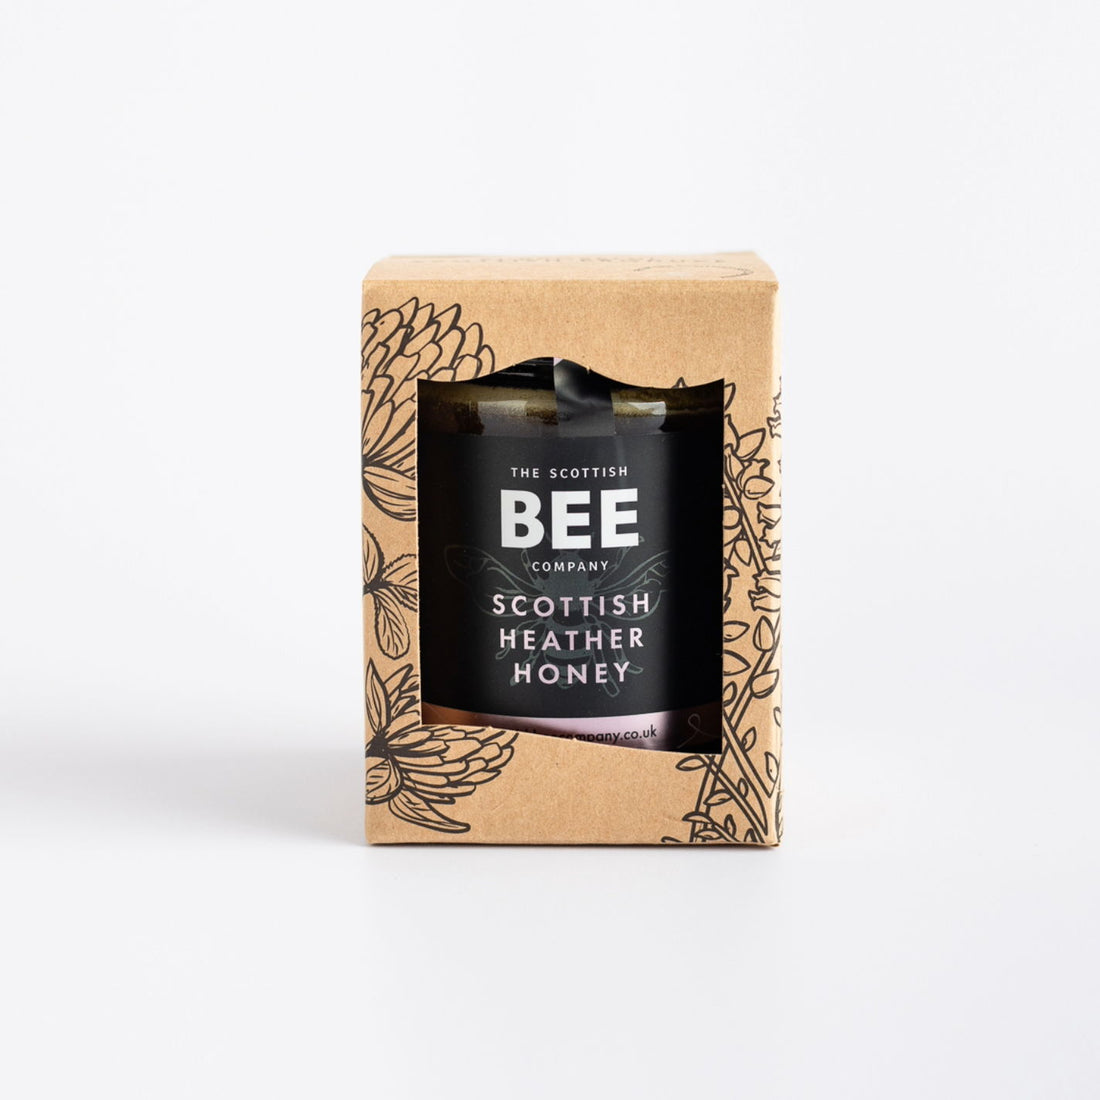 Scottish Bee Company Scottish Heather Honey 340g gift